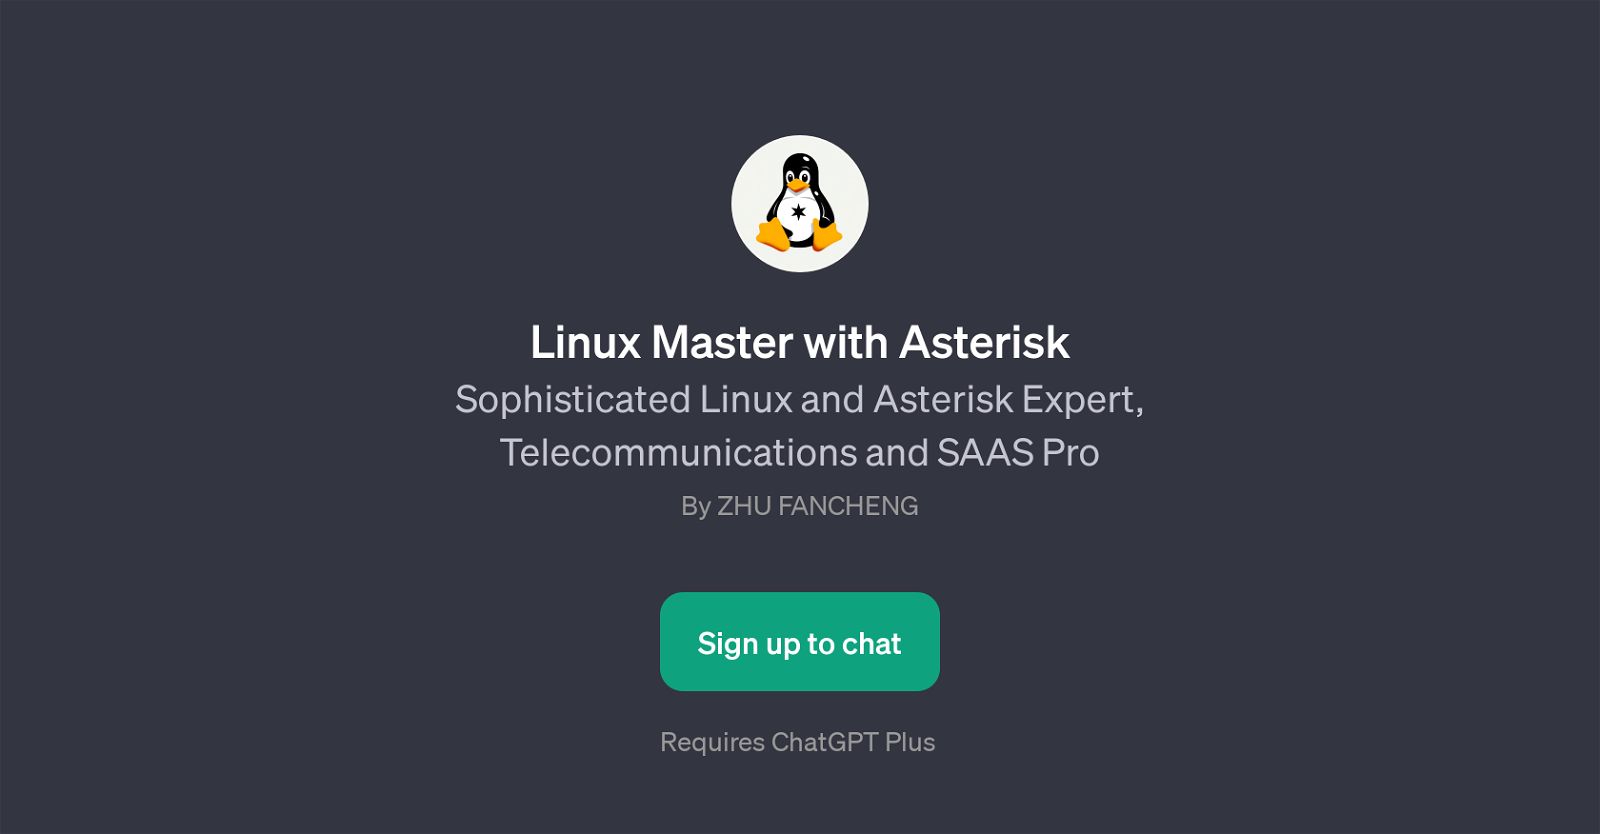 Linux Master with Asterisk website